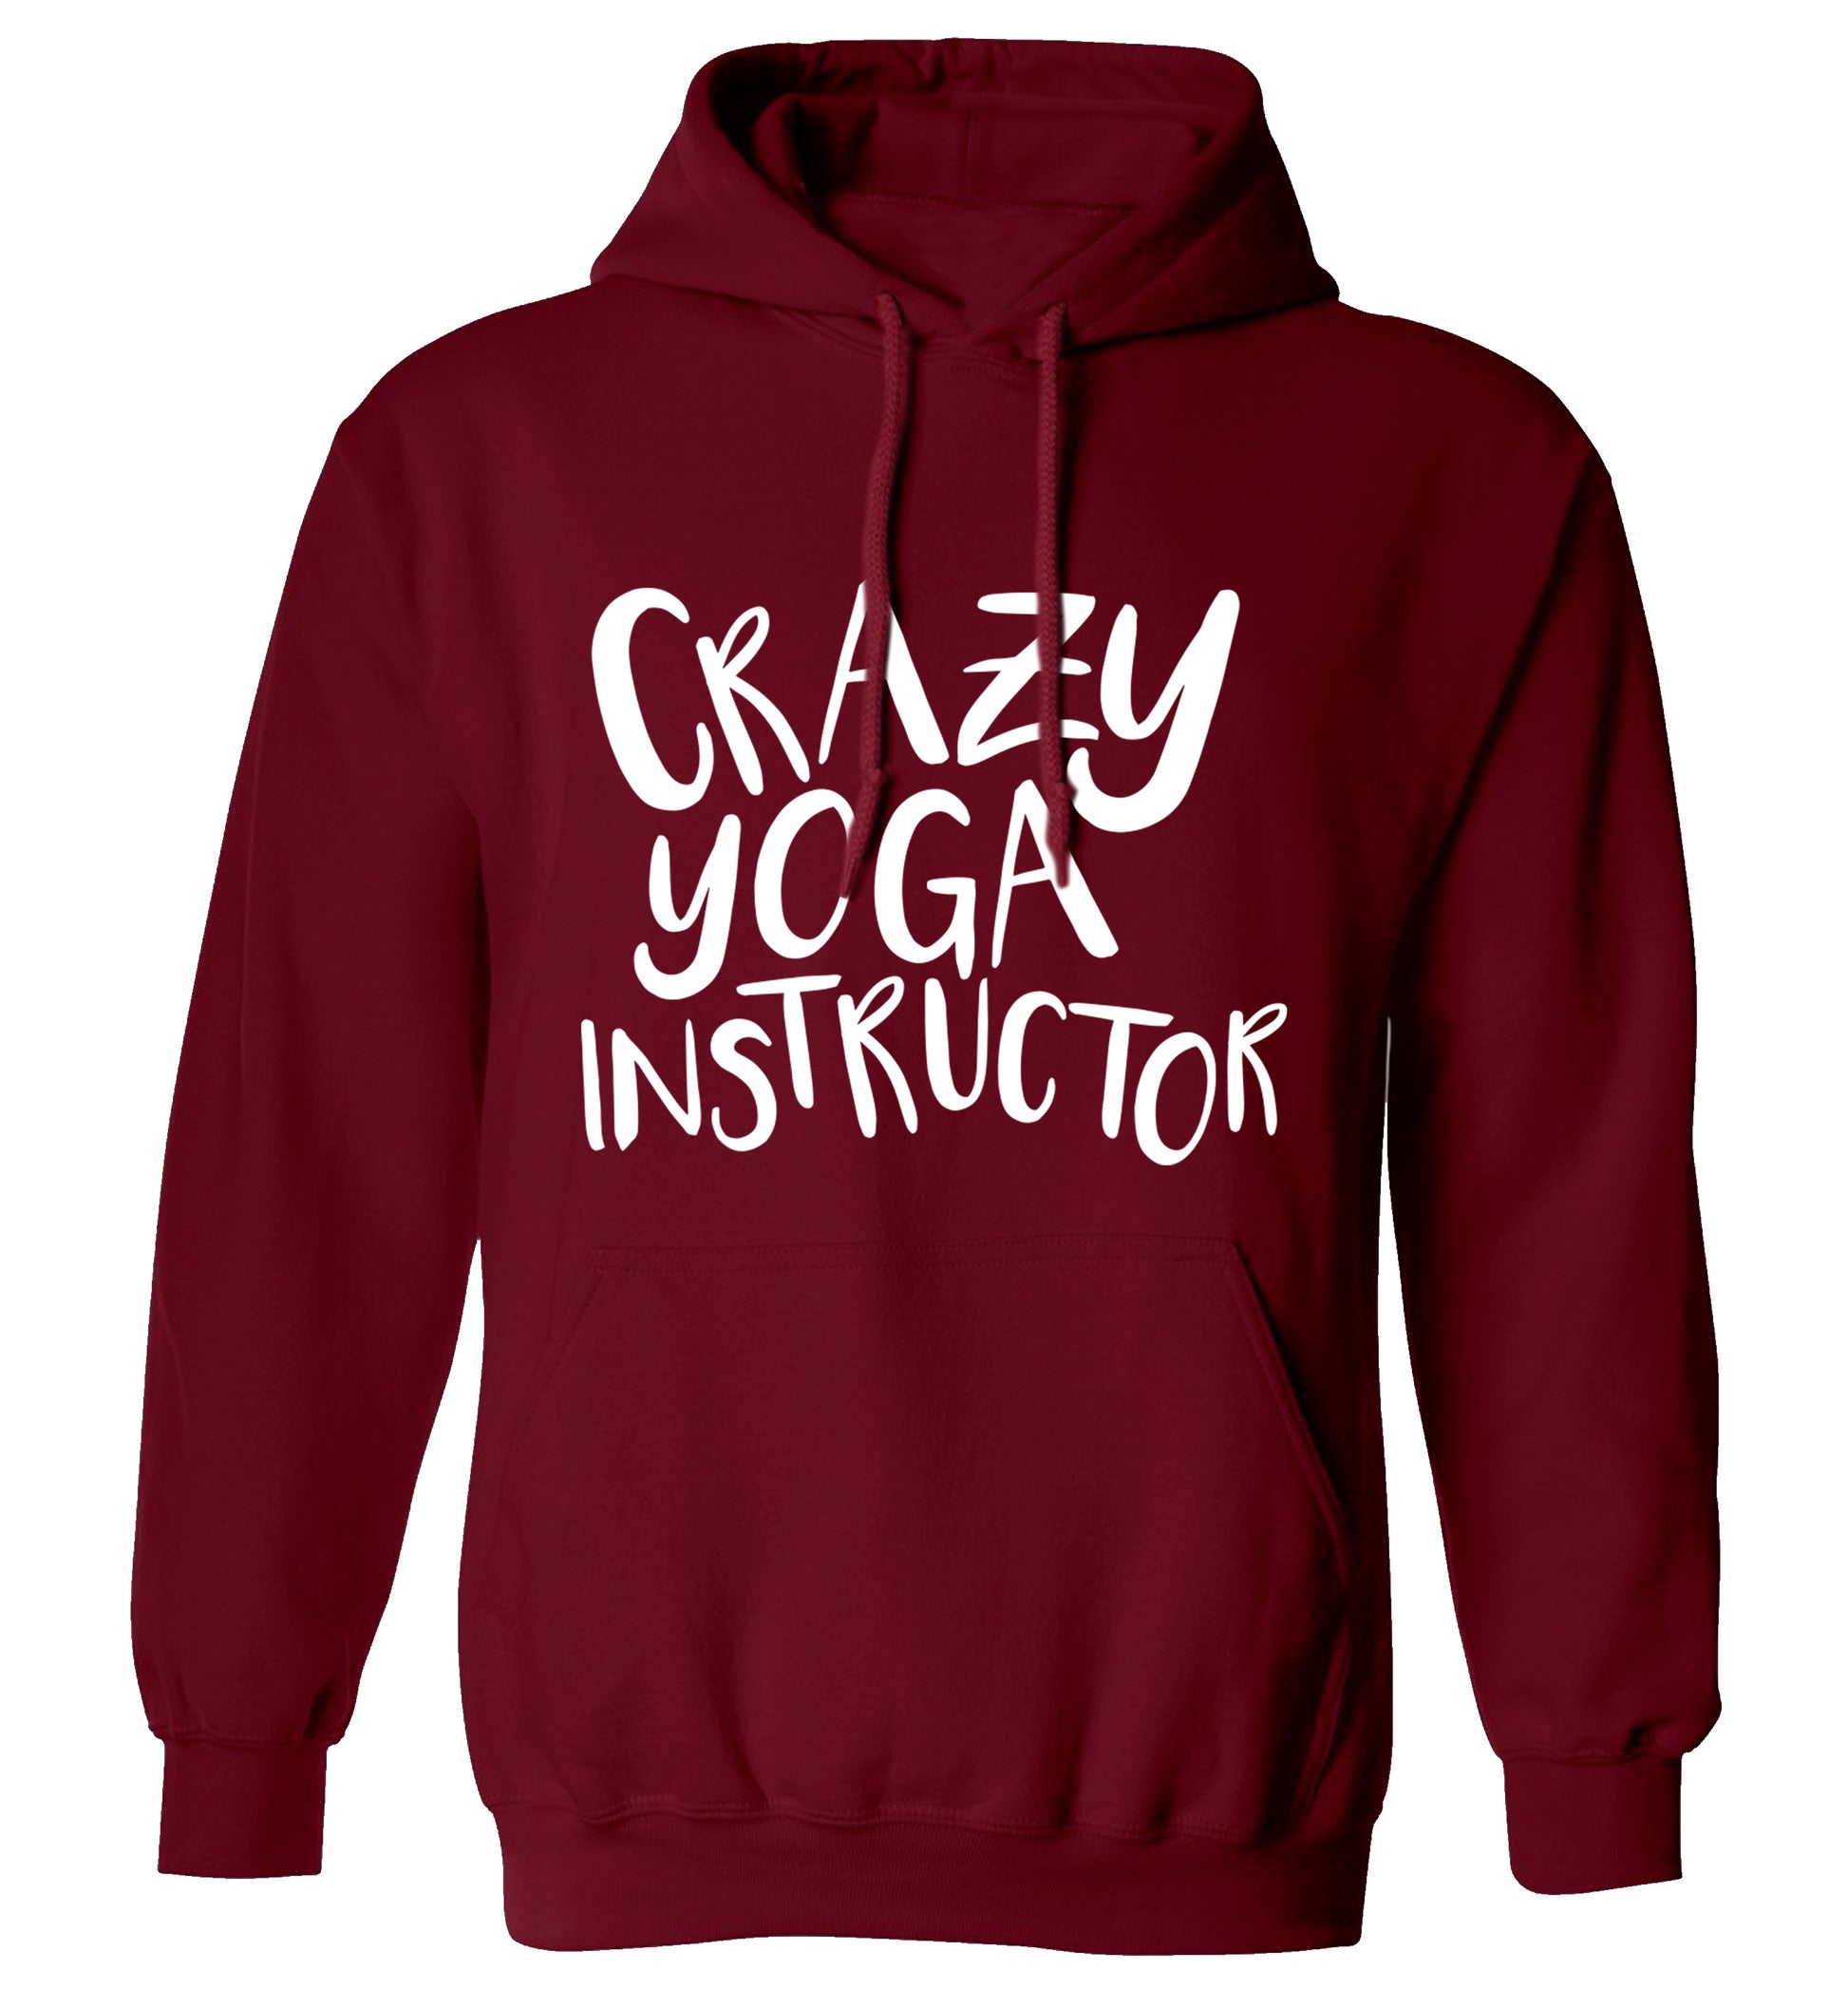 Crazy yoga instructor adults unisex maroon hoodie 2XL